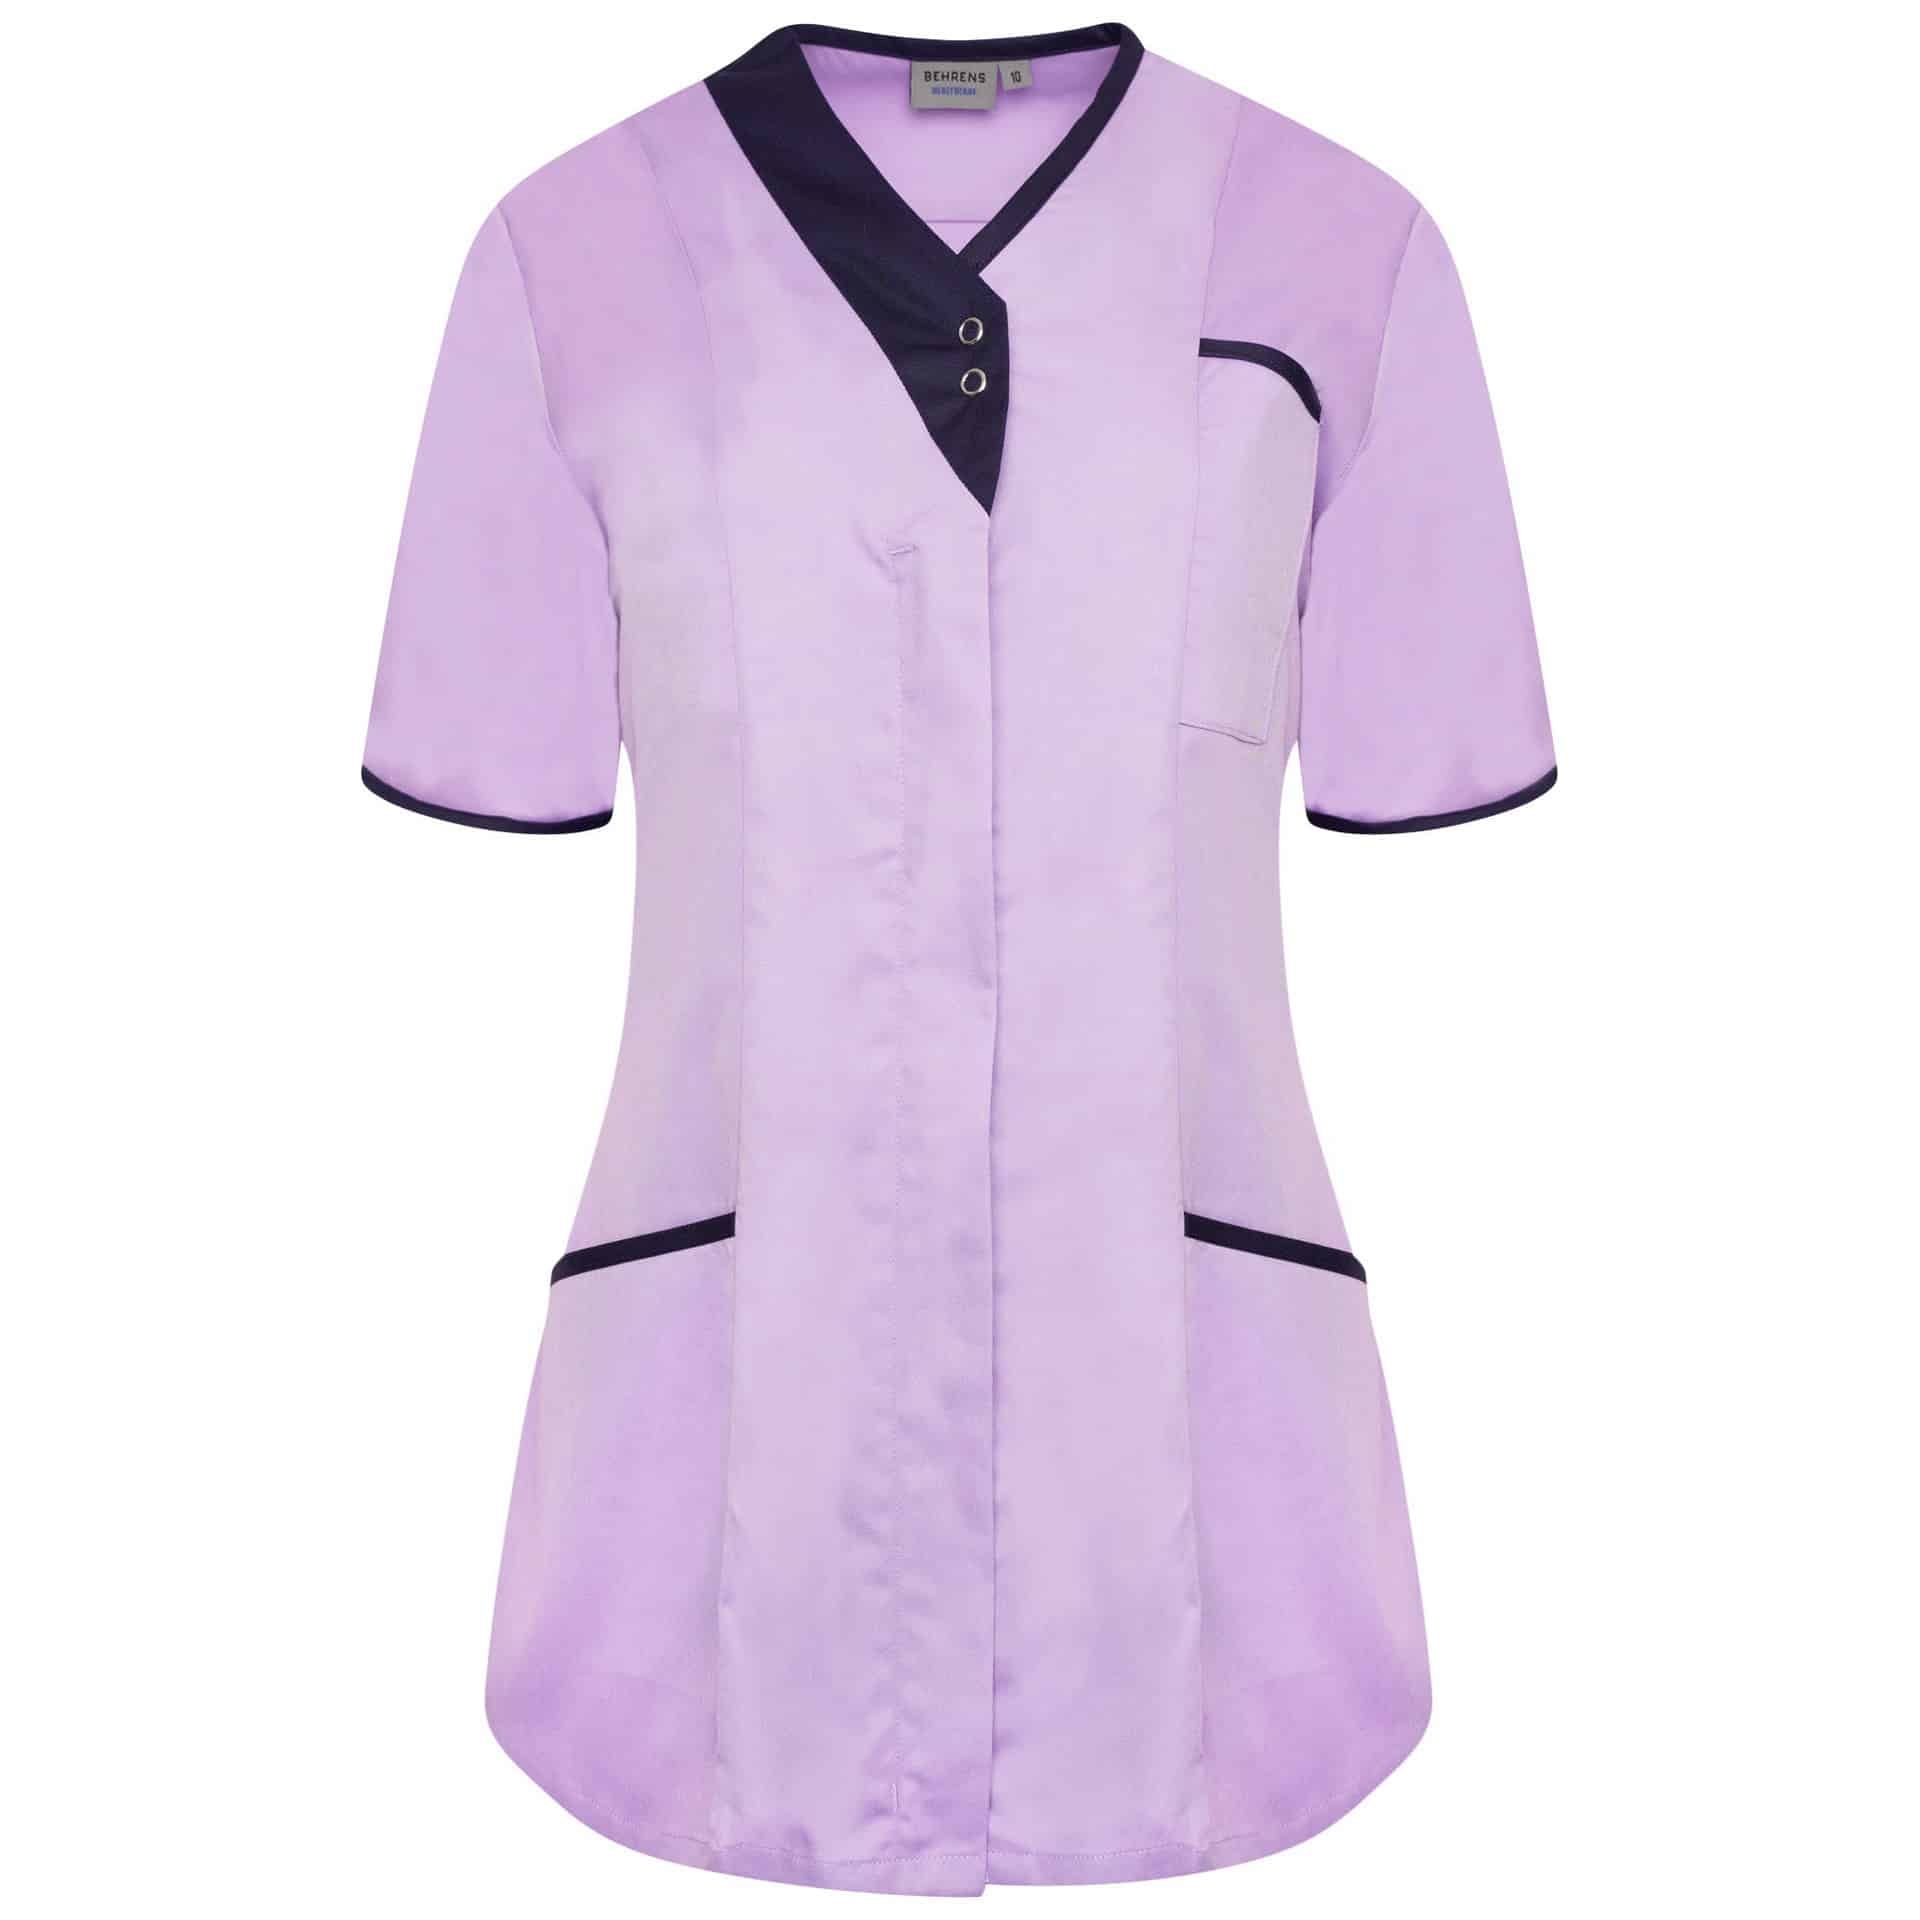 Behrens Asymmetric Tunic – Lilac/Navy Trim – 8 – Uniforms Online